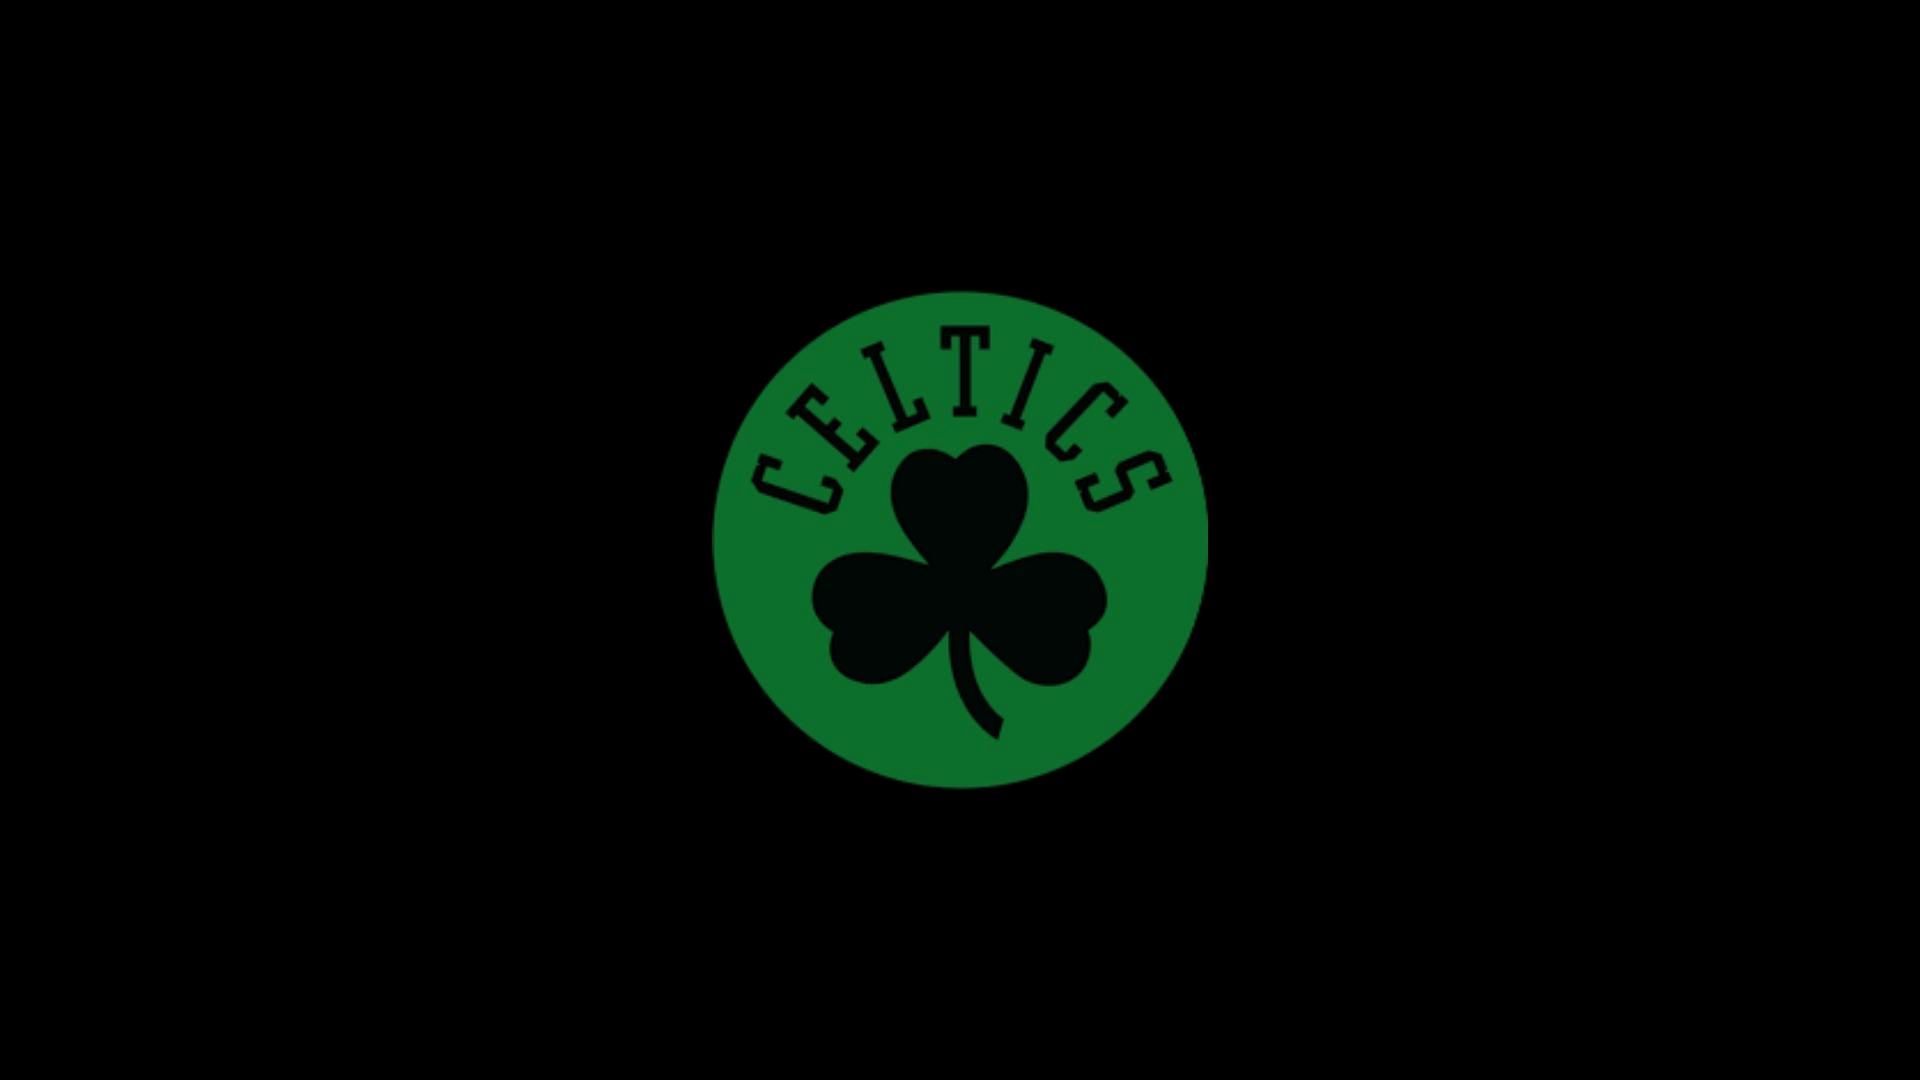 Celtics Wallpaper Free Celtics Background